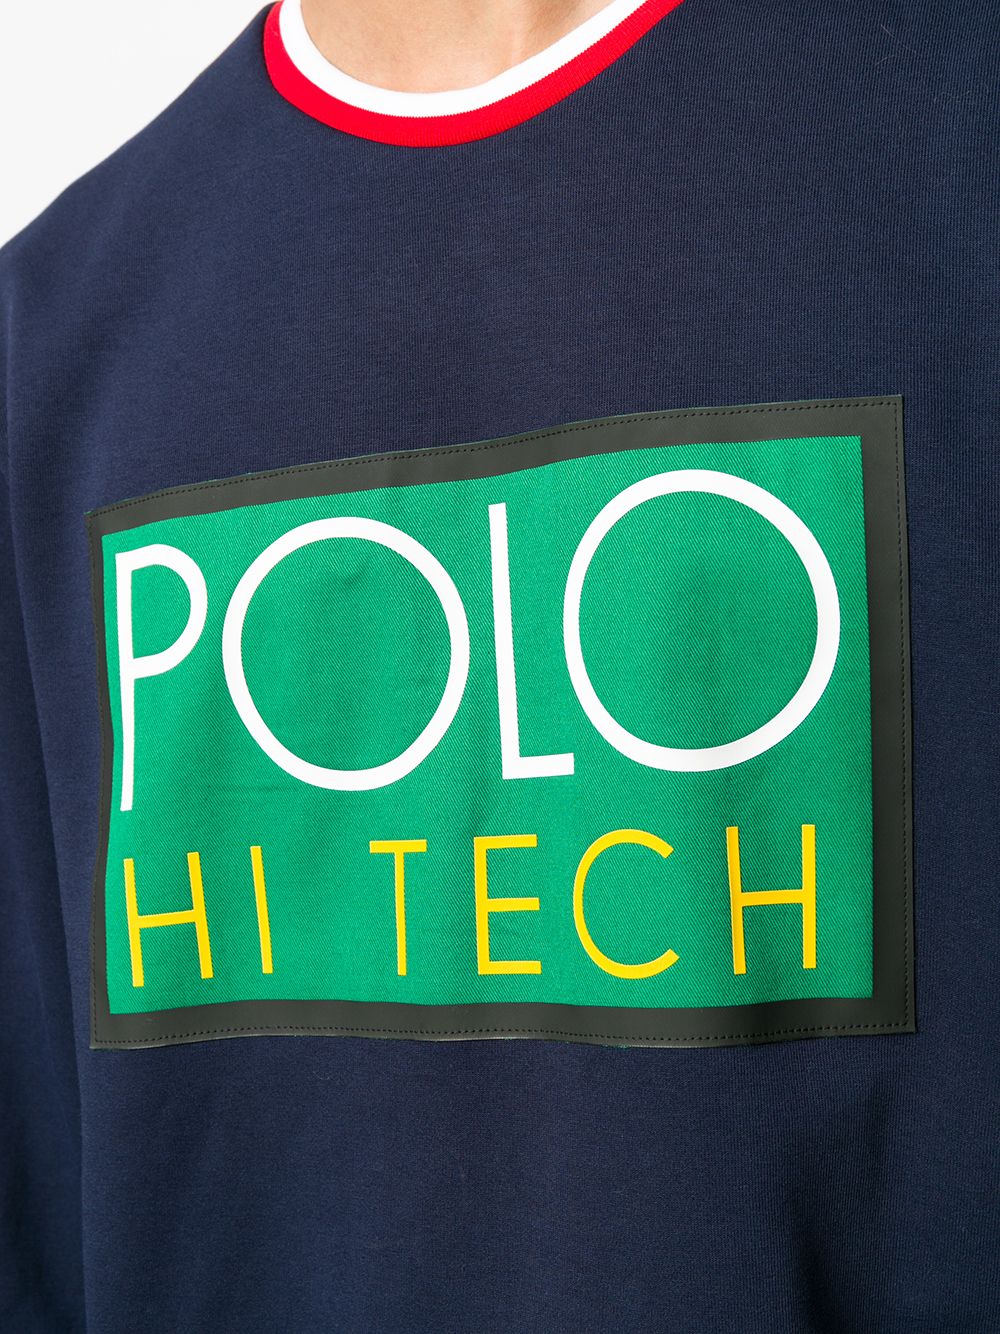 фото Polo ralph lauren толстовка 'hi tech'